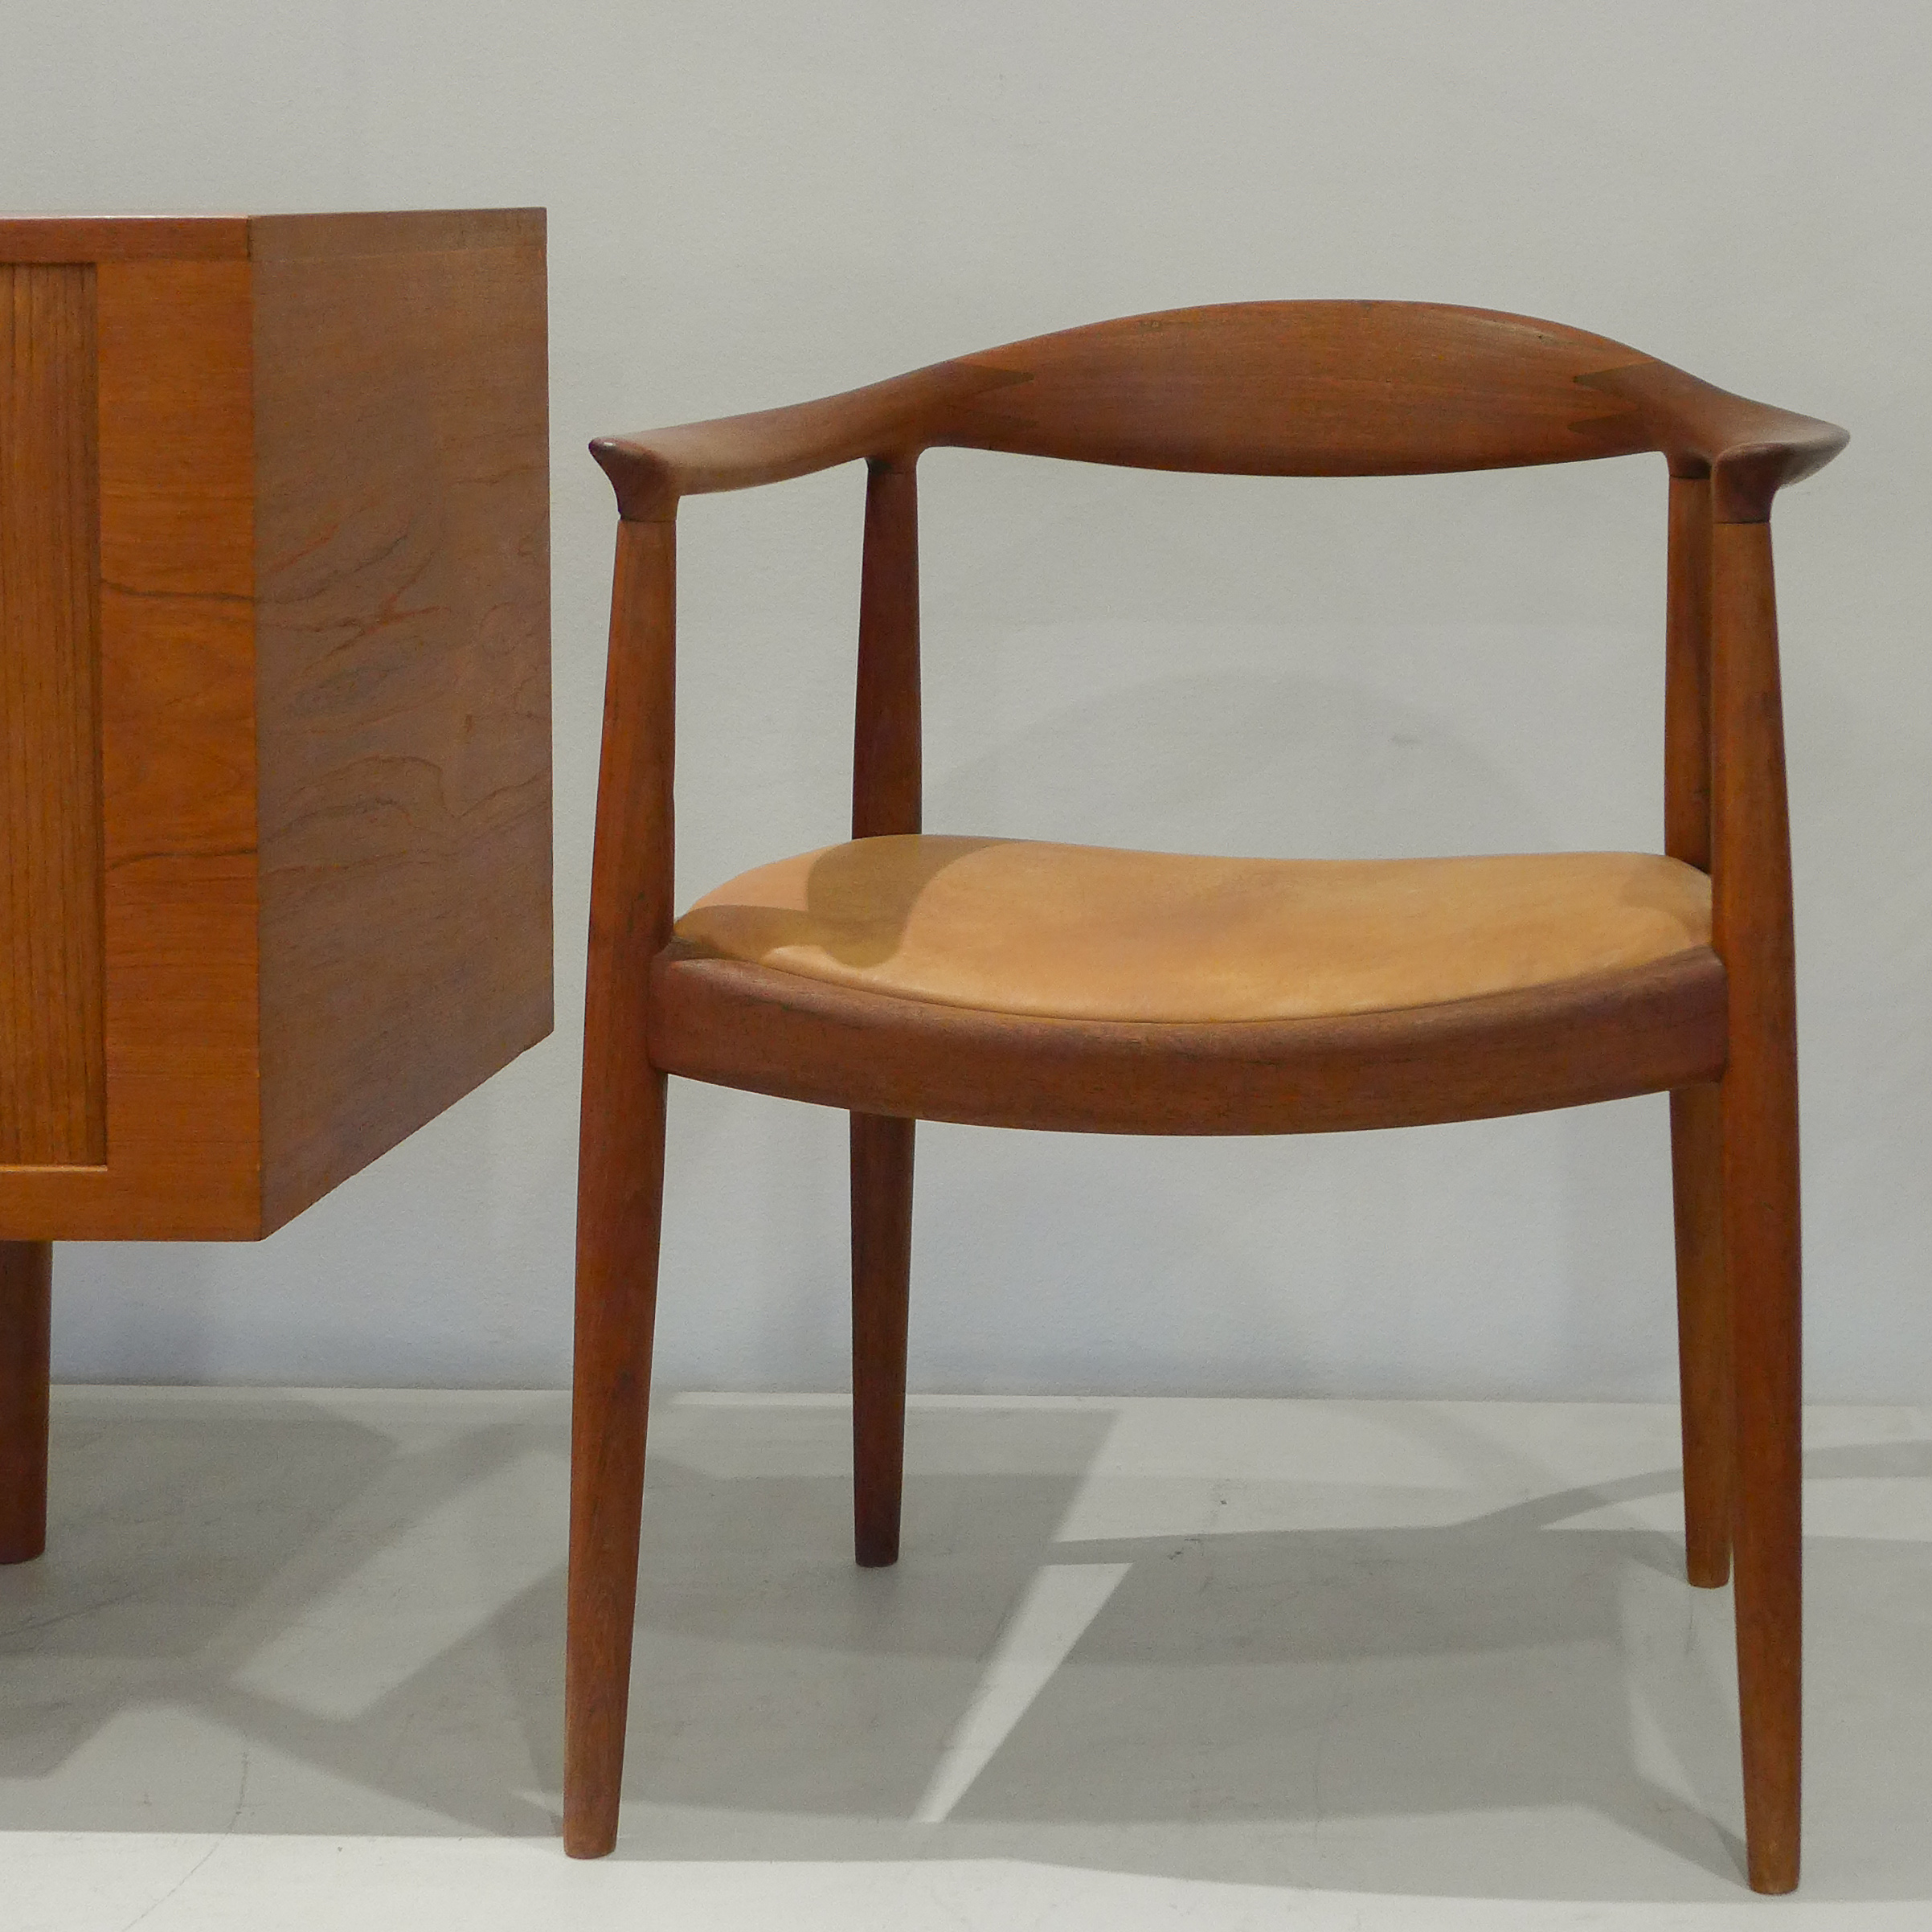 Ledig perler ægteskab Den Runde Stol / The Chair by Hans Wegner 1949 — danish architecture and  design review